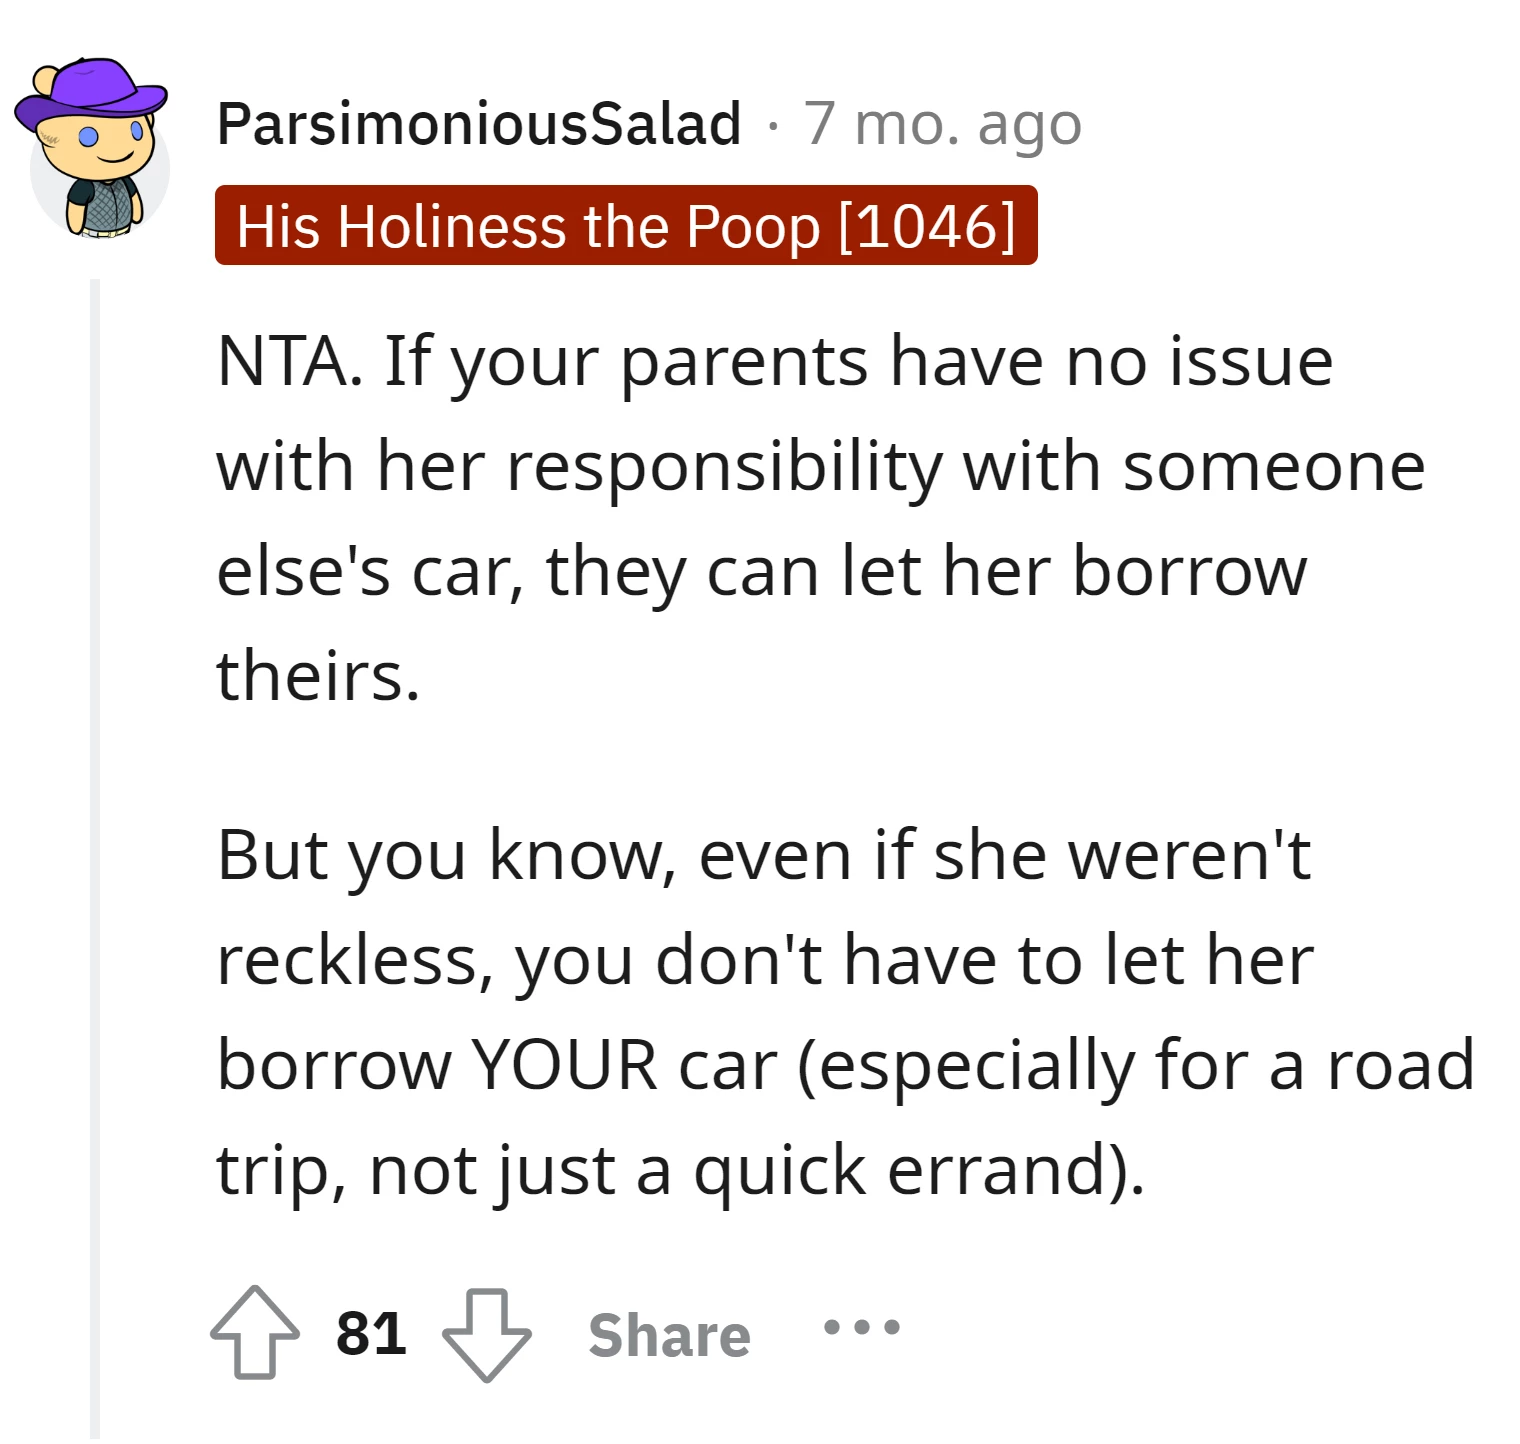 The parents can let her borrow their car